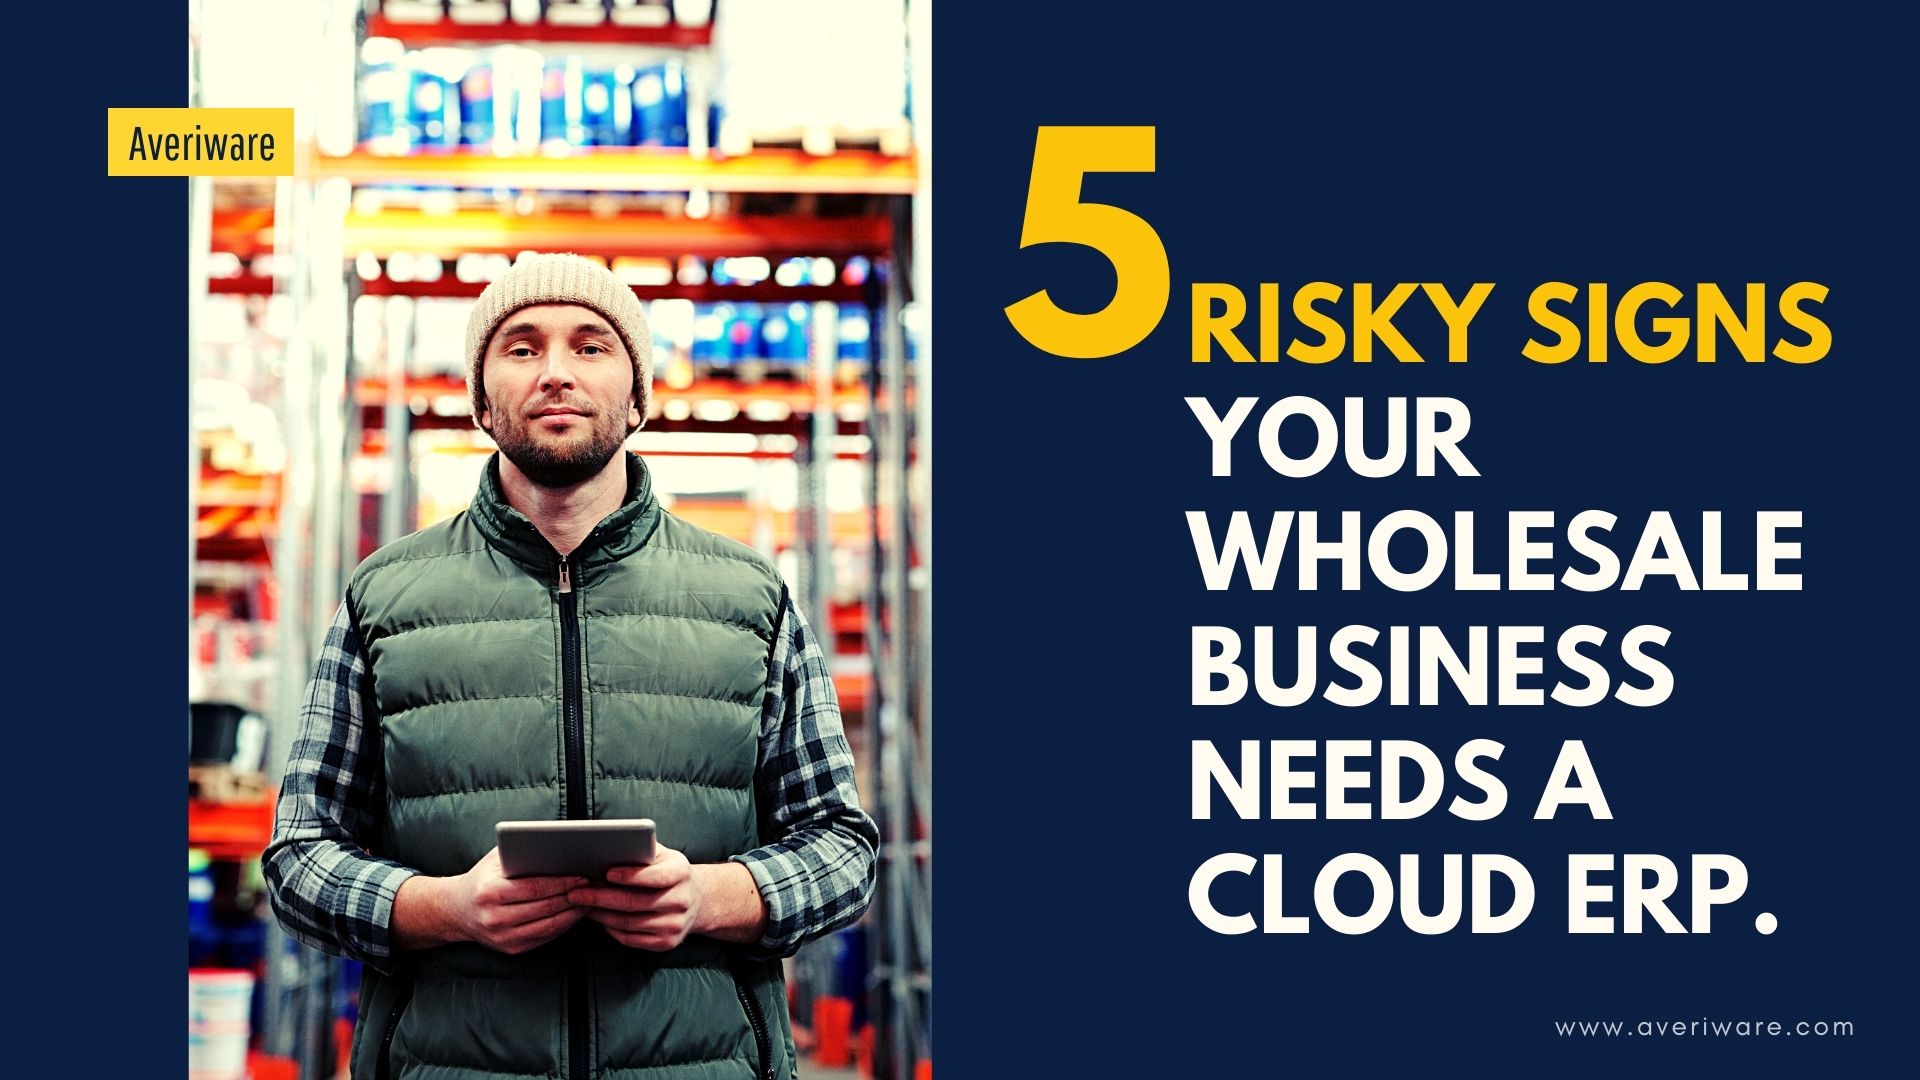 5 Risky Signs Your Wholesale Business Needs a Cloud ERP